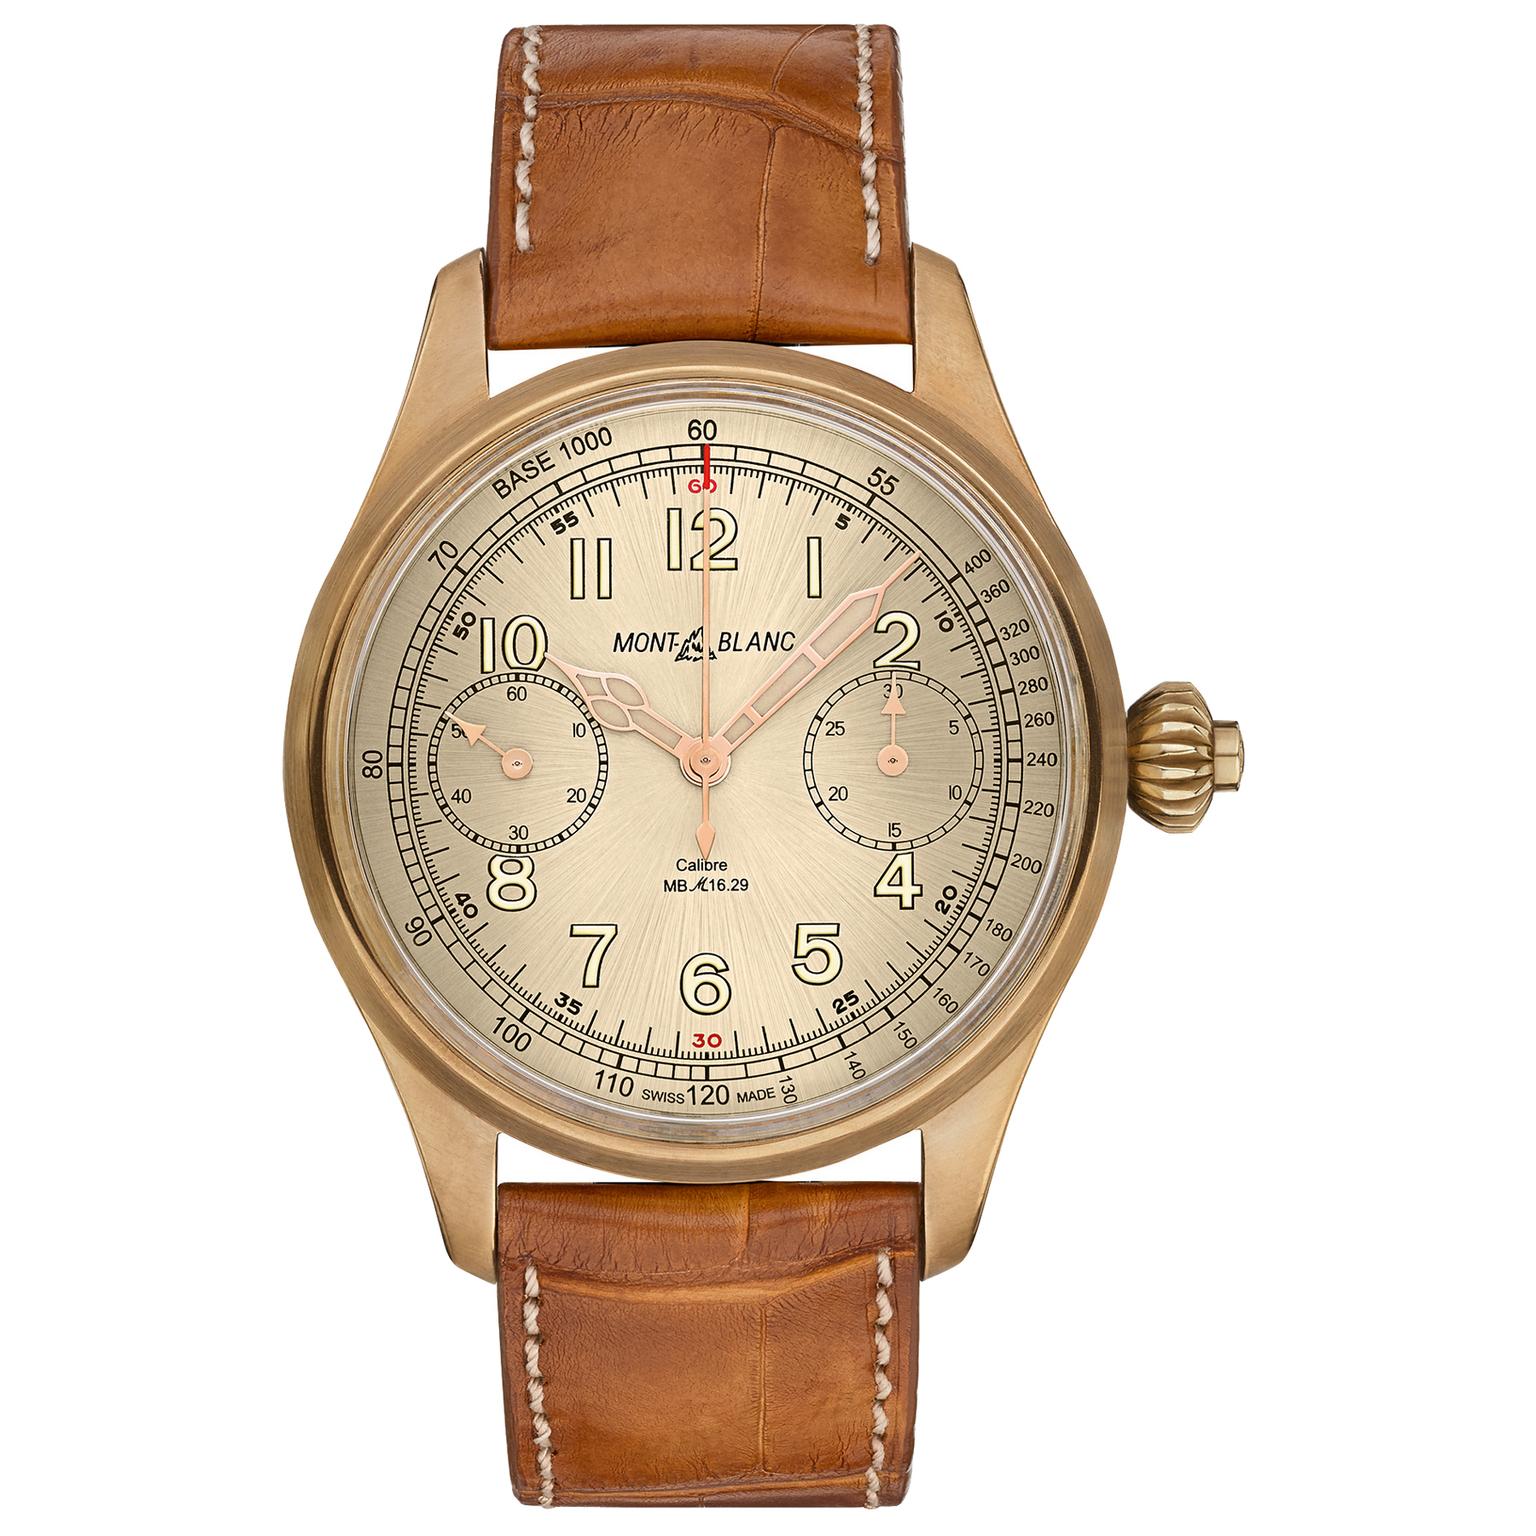 Montblanc 1858 Chronograph watch